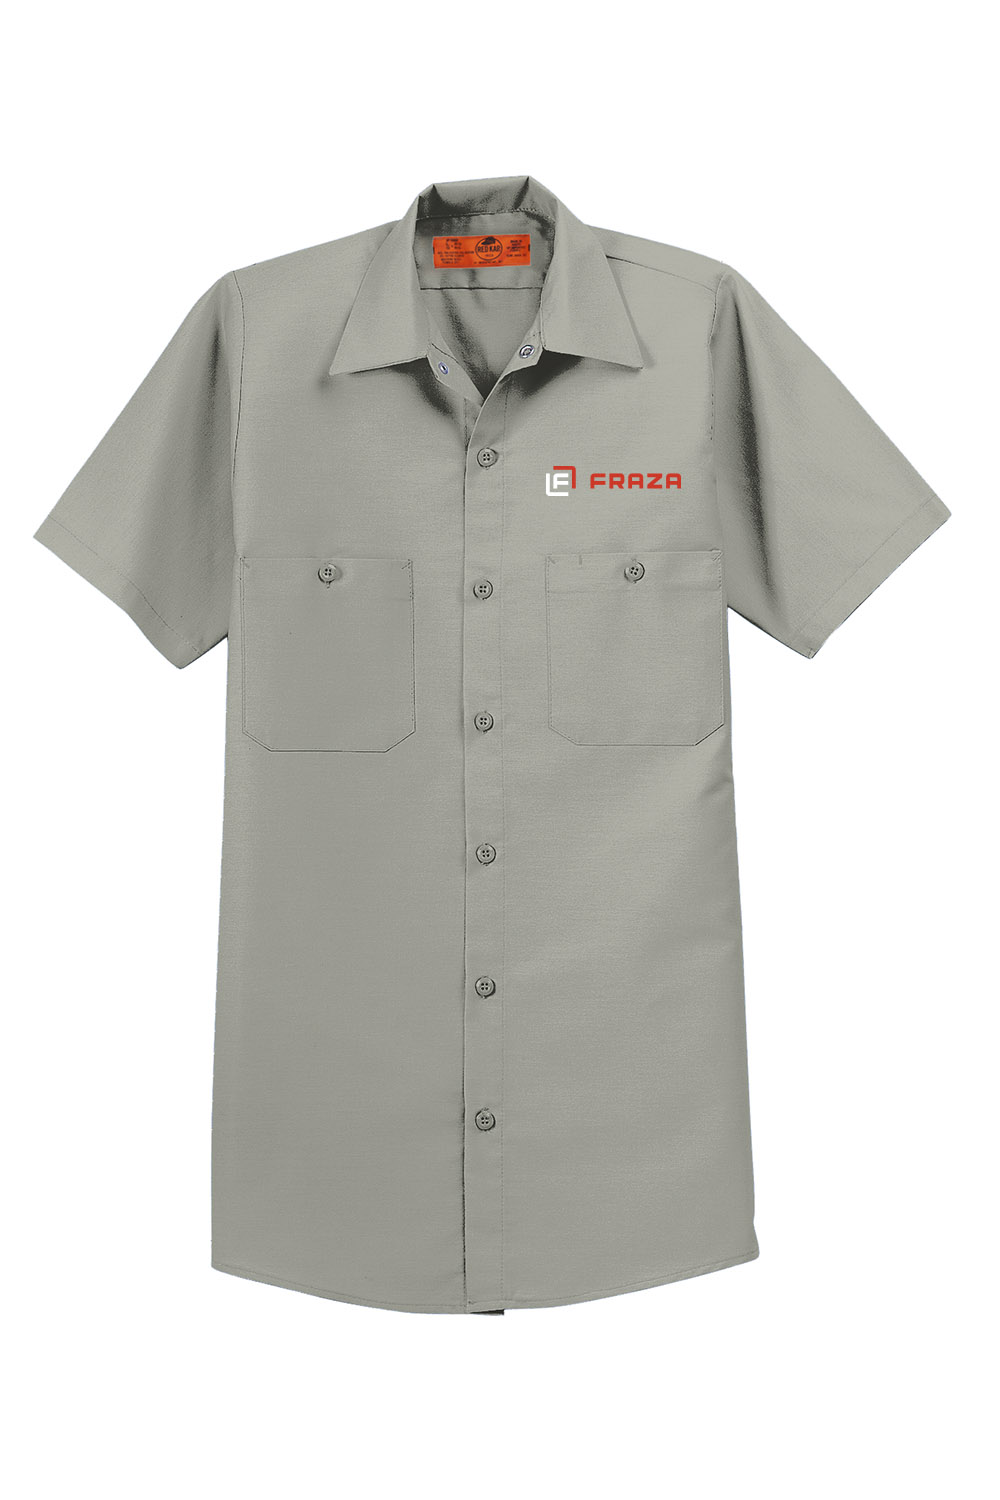 Red Kap® – Short Sleeve Industrial Work Shirt - Fraza Company Store